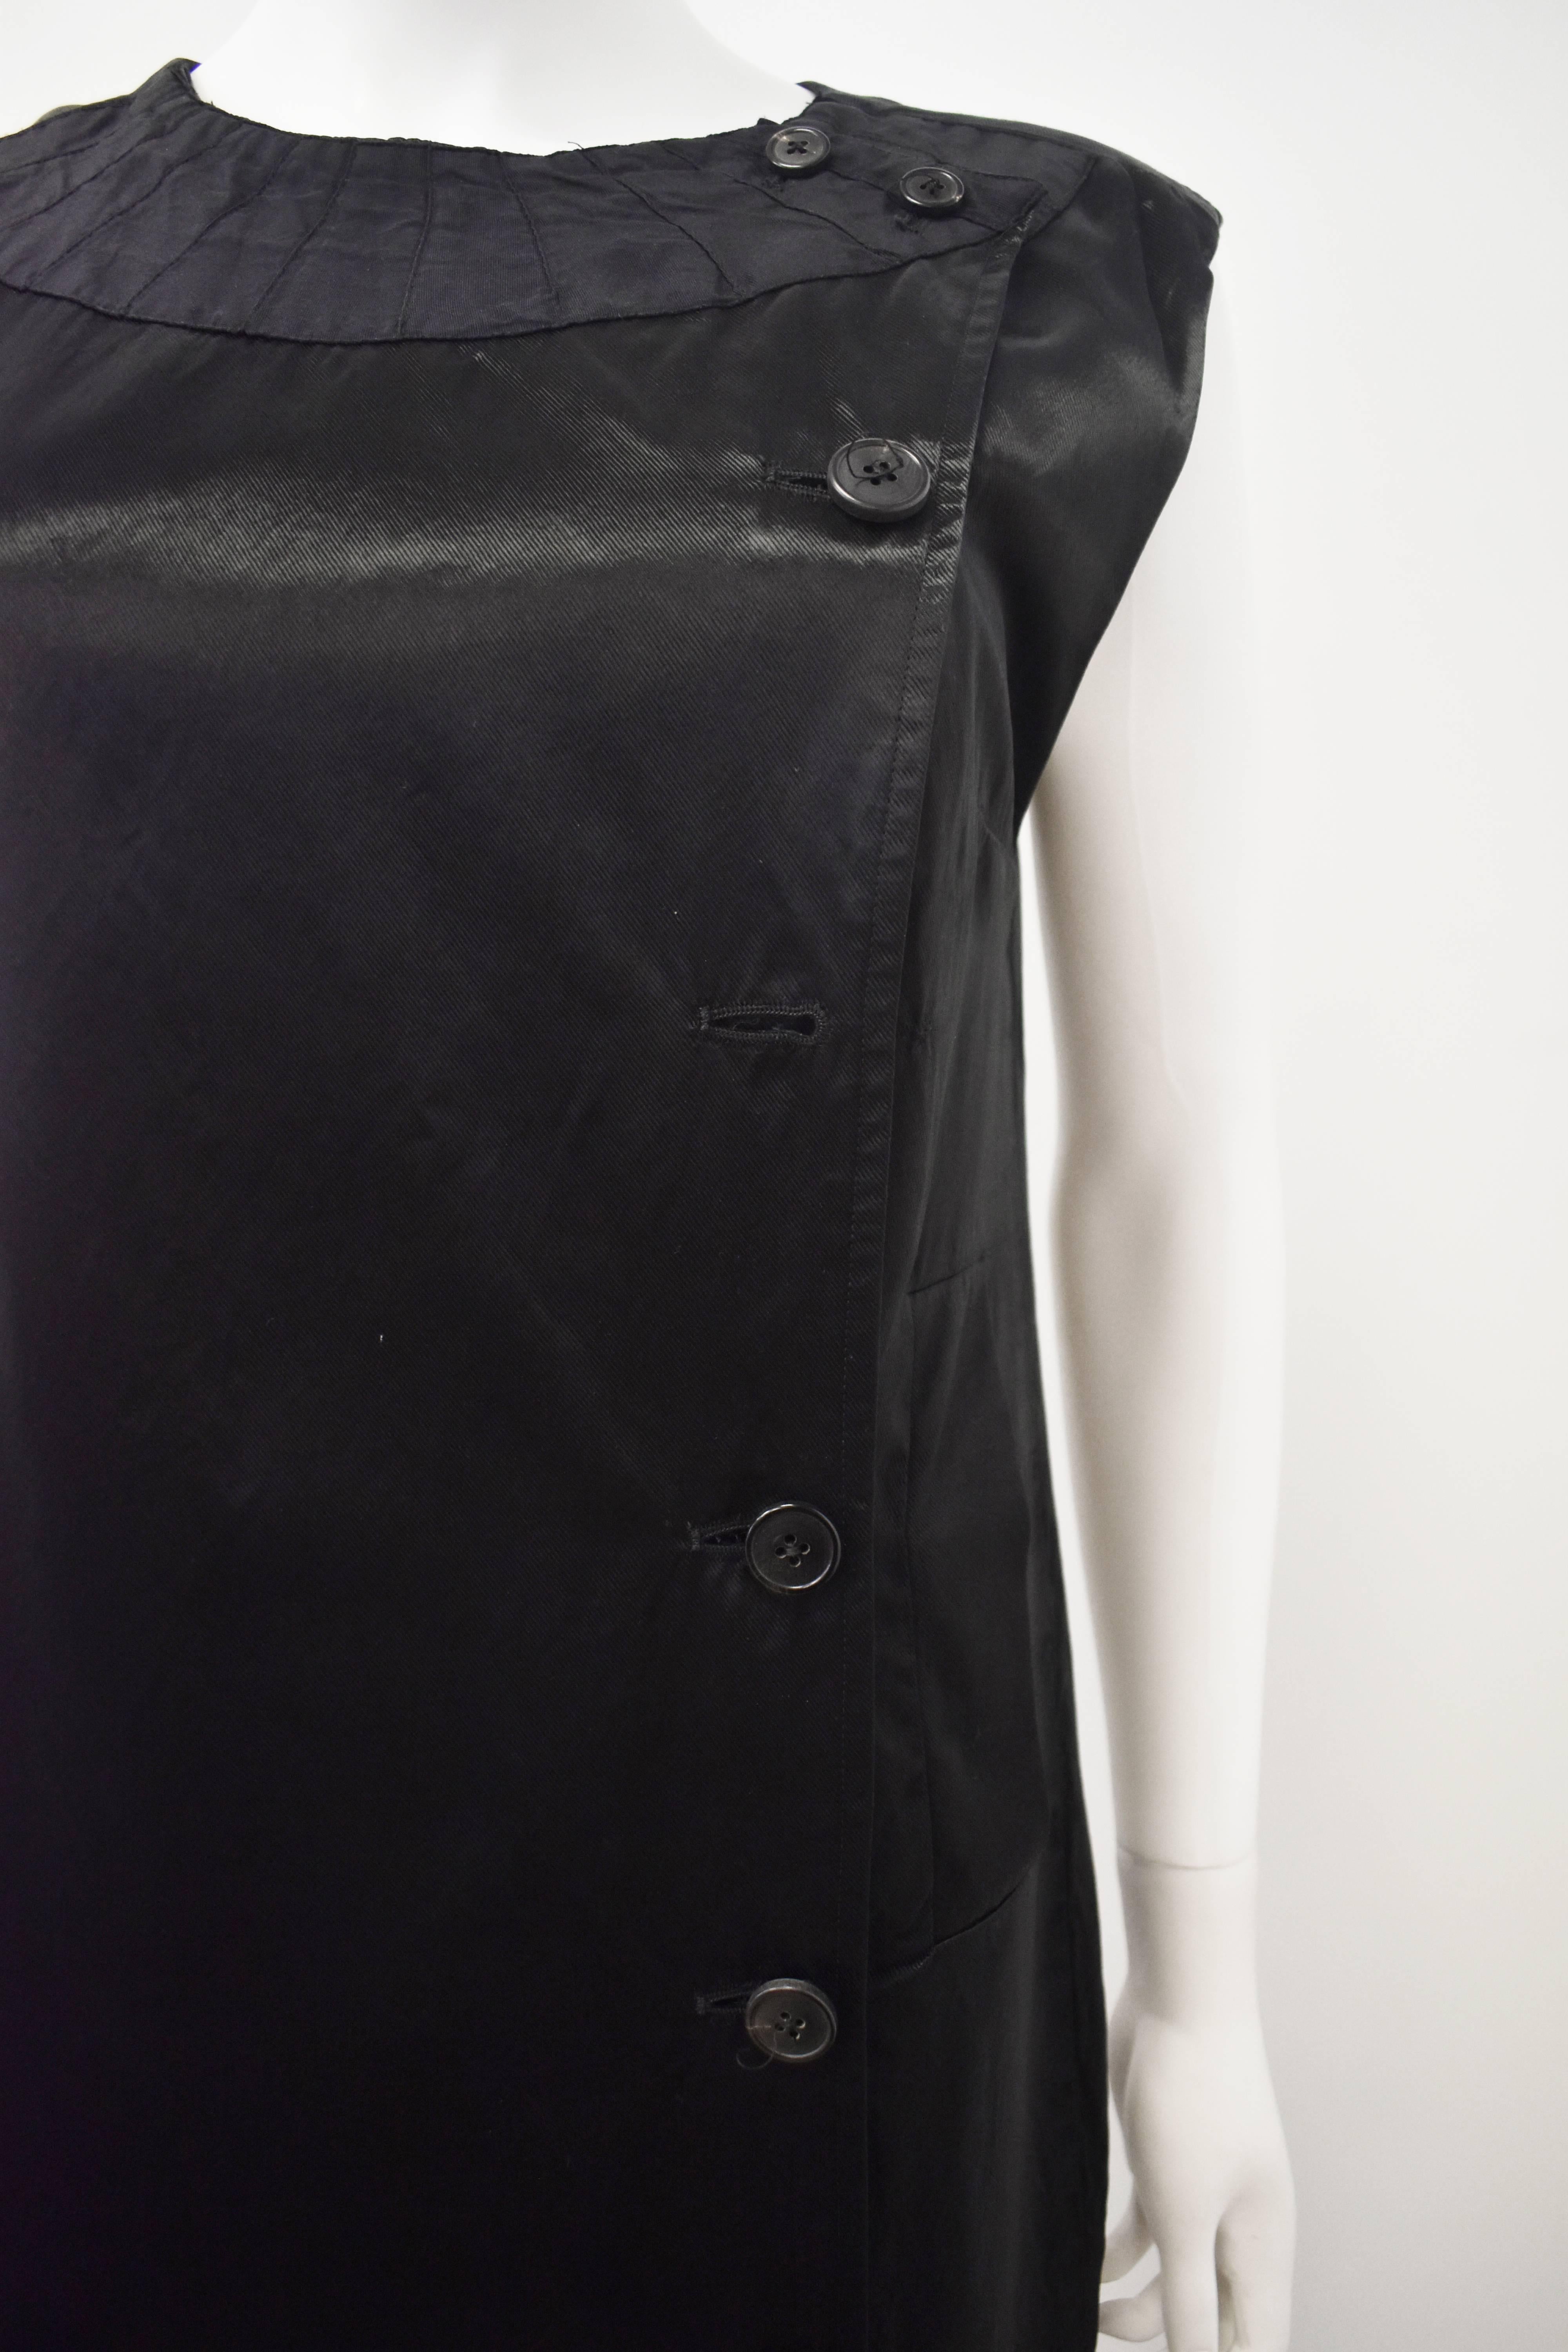 Dries van Noten black button down dress For Sale 1